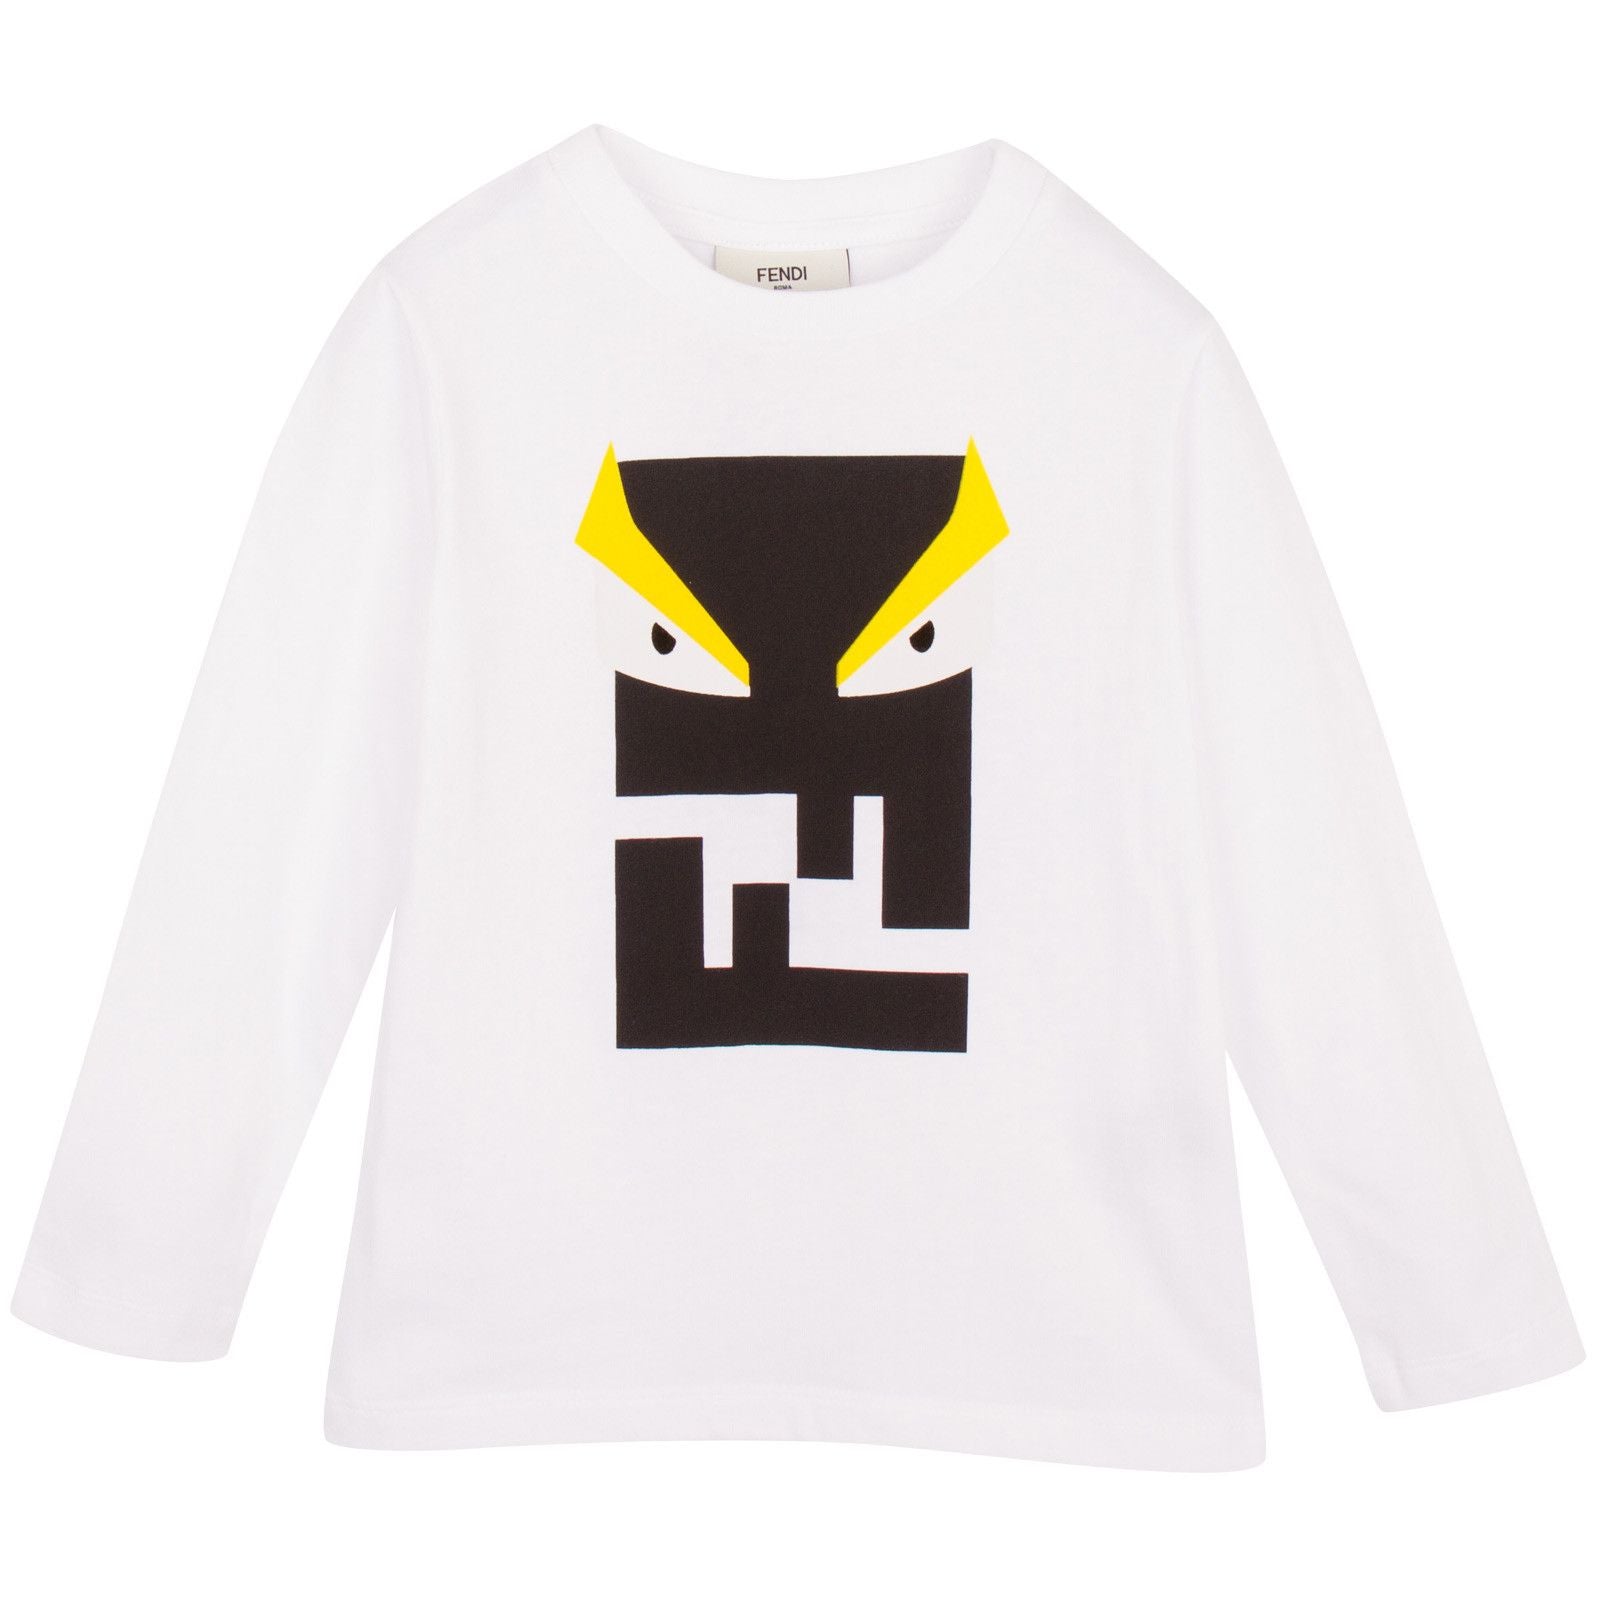 Boys White Printed Monster Cotton T-Shirt - CÉMAROSE | Children's Fashion Store - 1